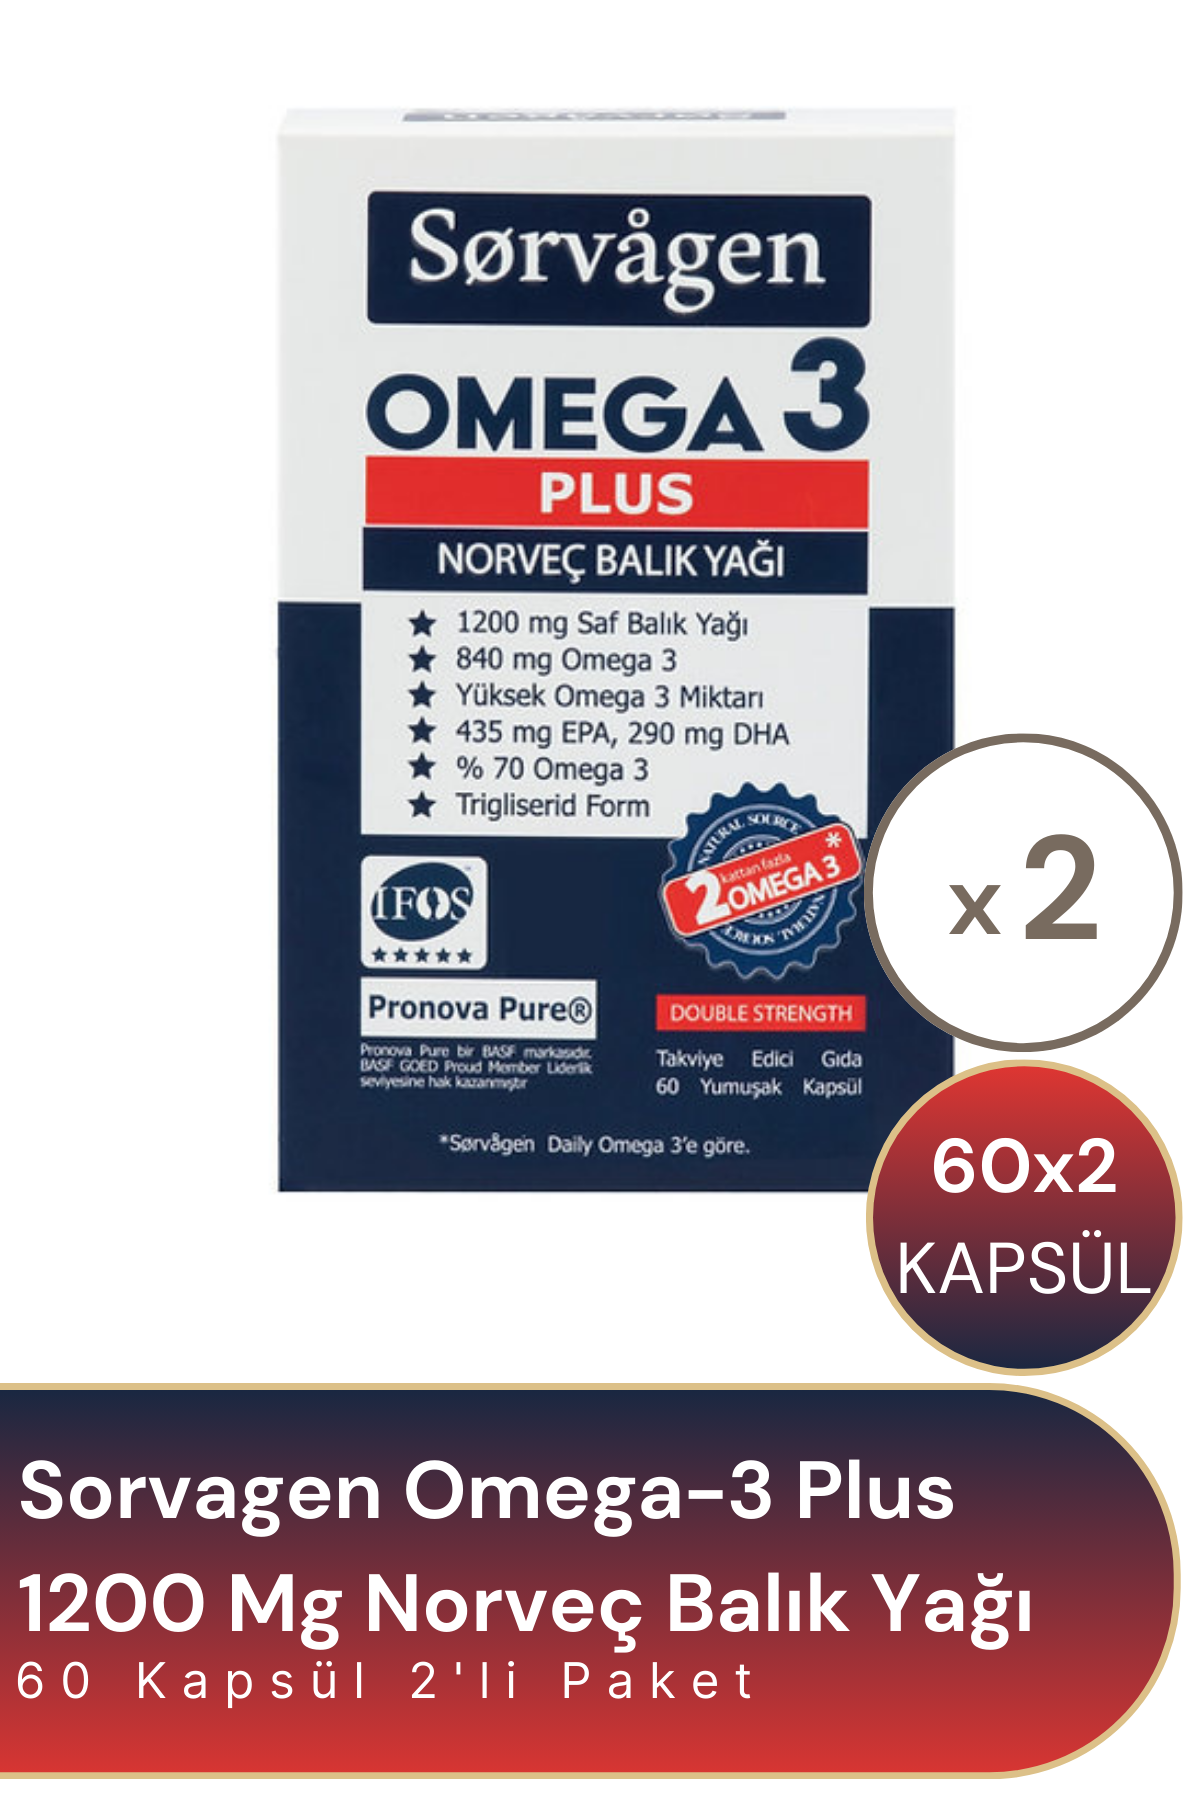 Sorvagen Omega-3 Plus 1200 Mg Norveç Balık Yağı 60 Kapsül 2'li Paket